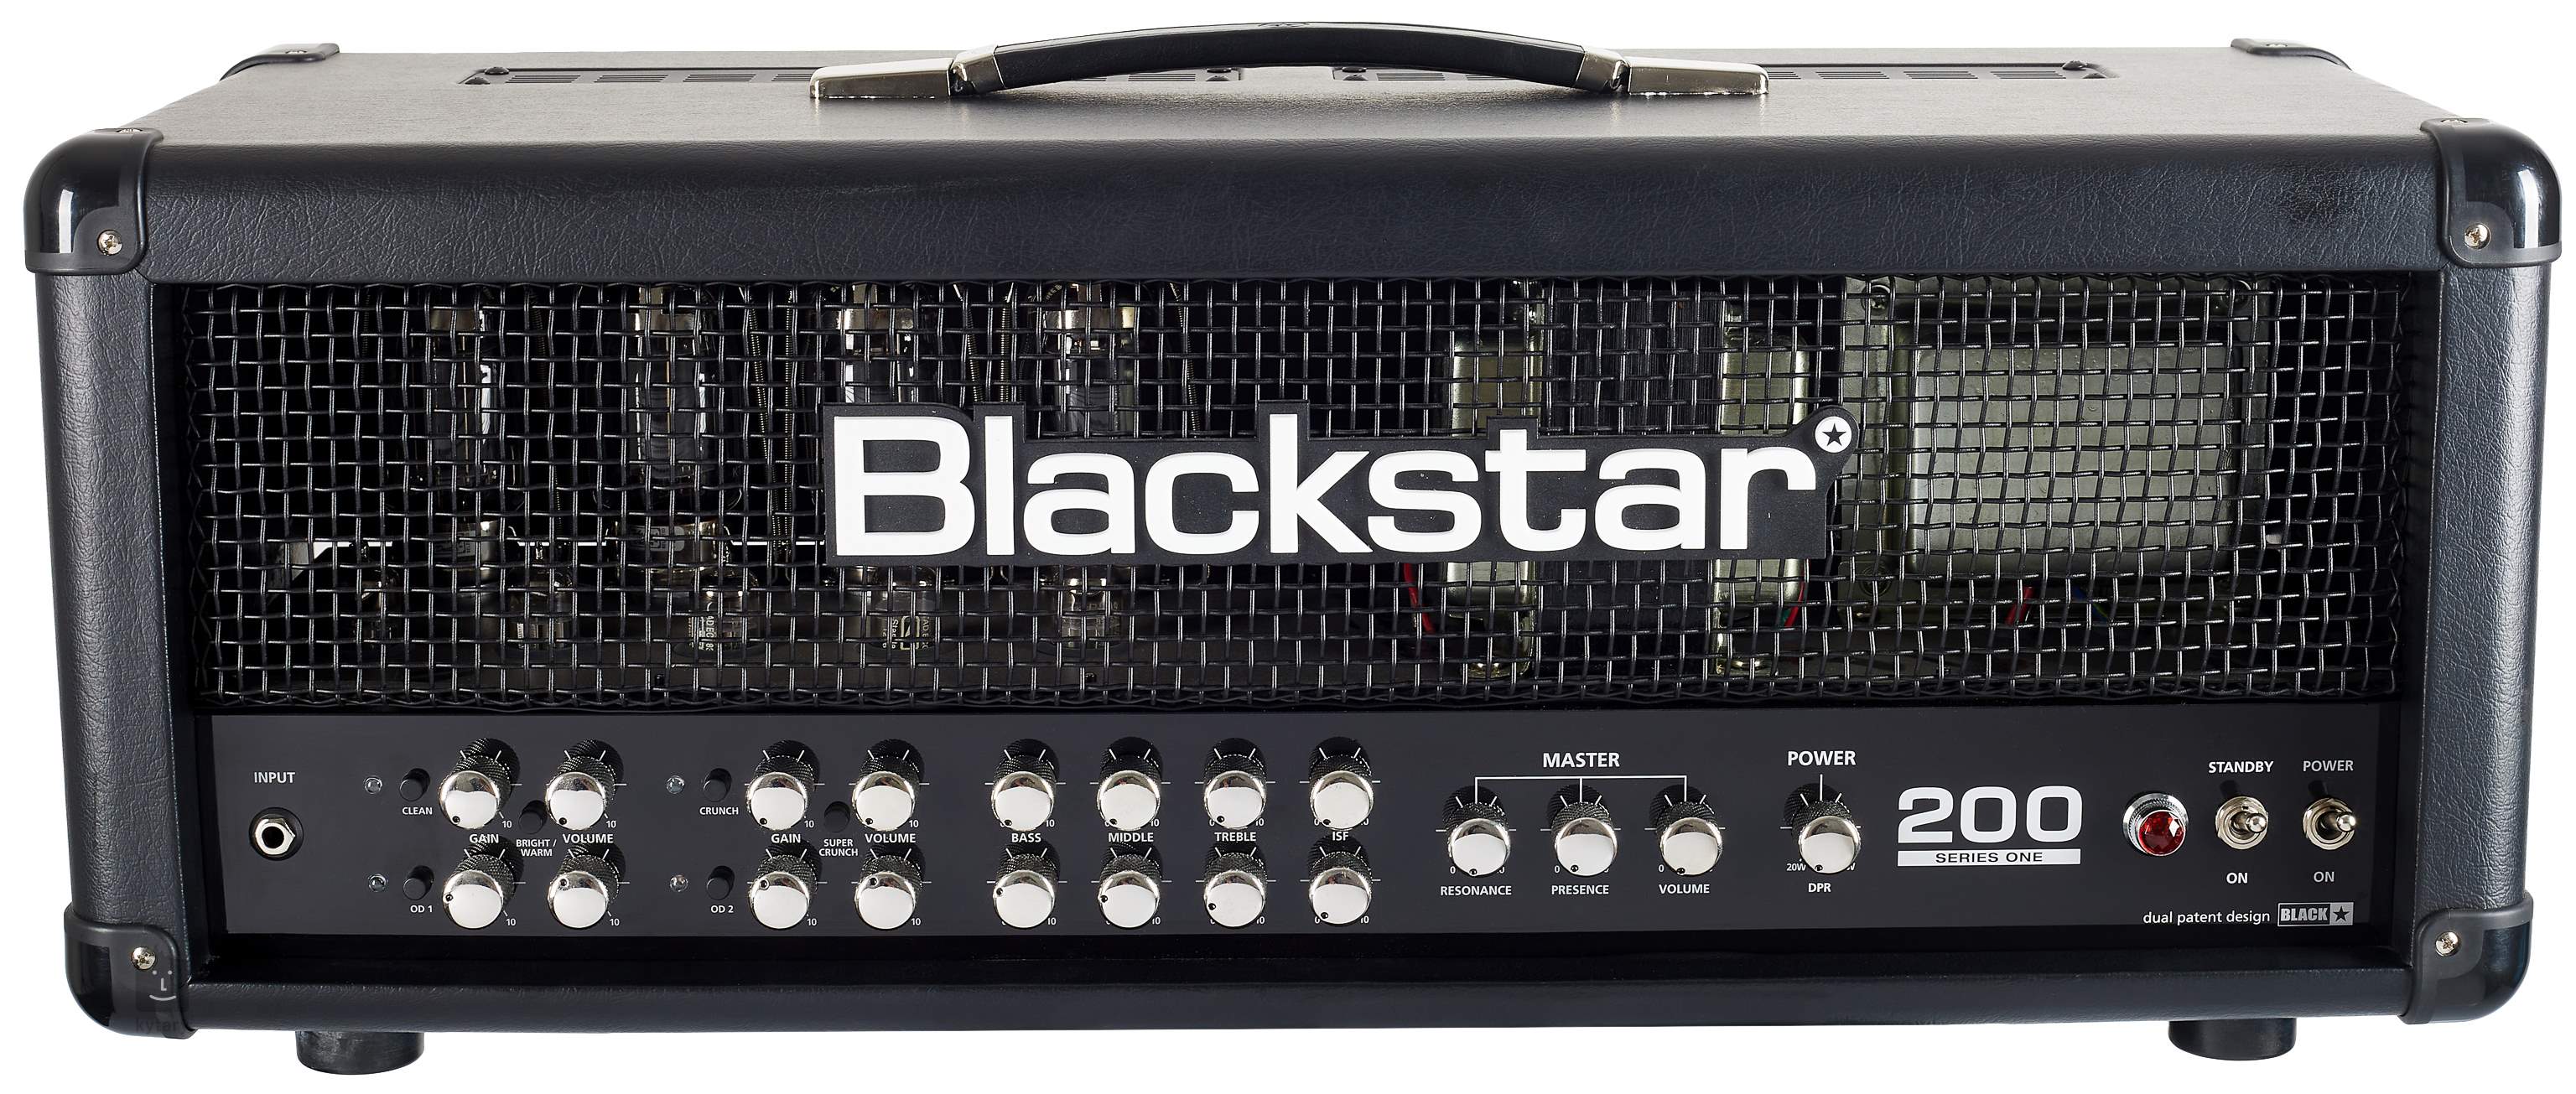 BLACKSTAR Series One 200 (used) Tube Guitar Amplifier | Kytary.ie